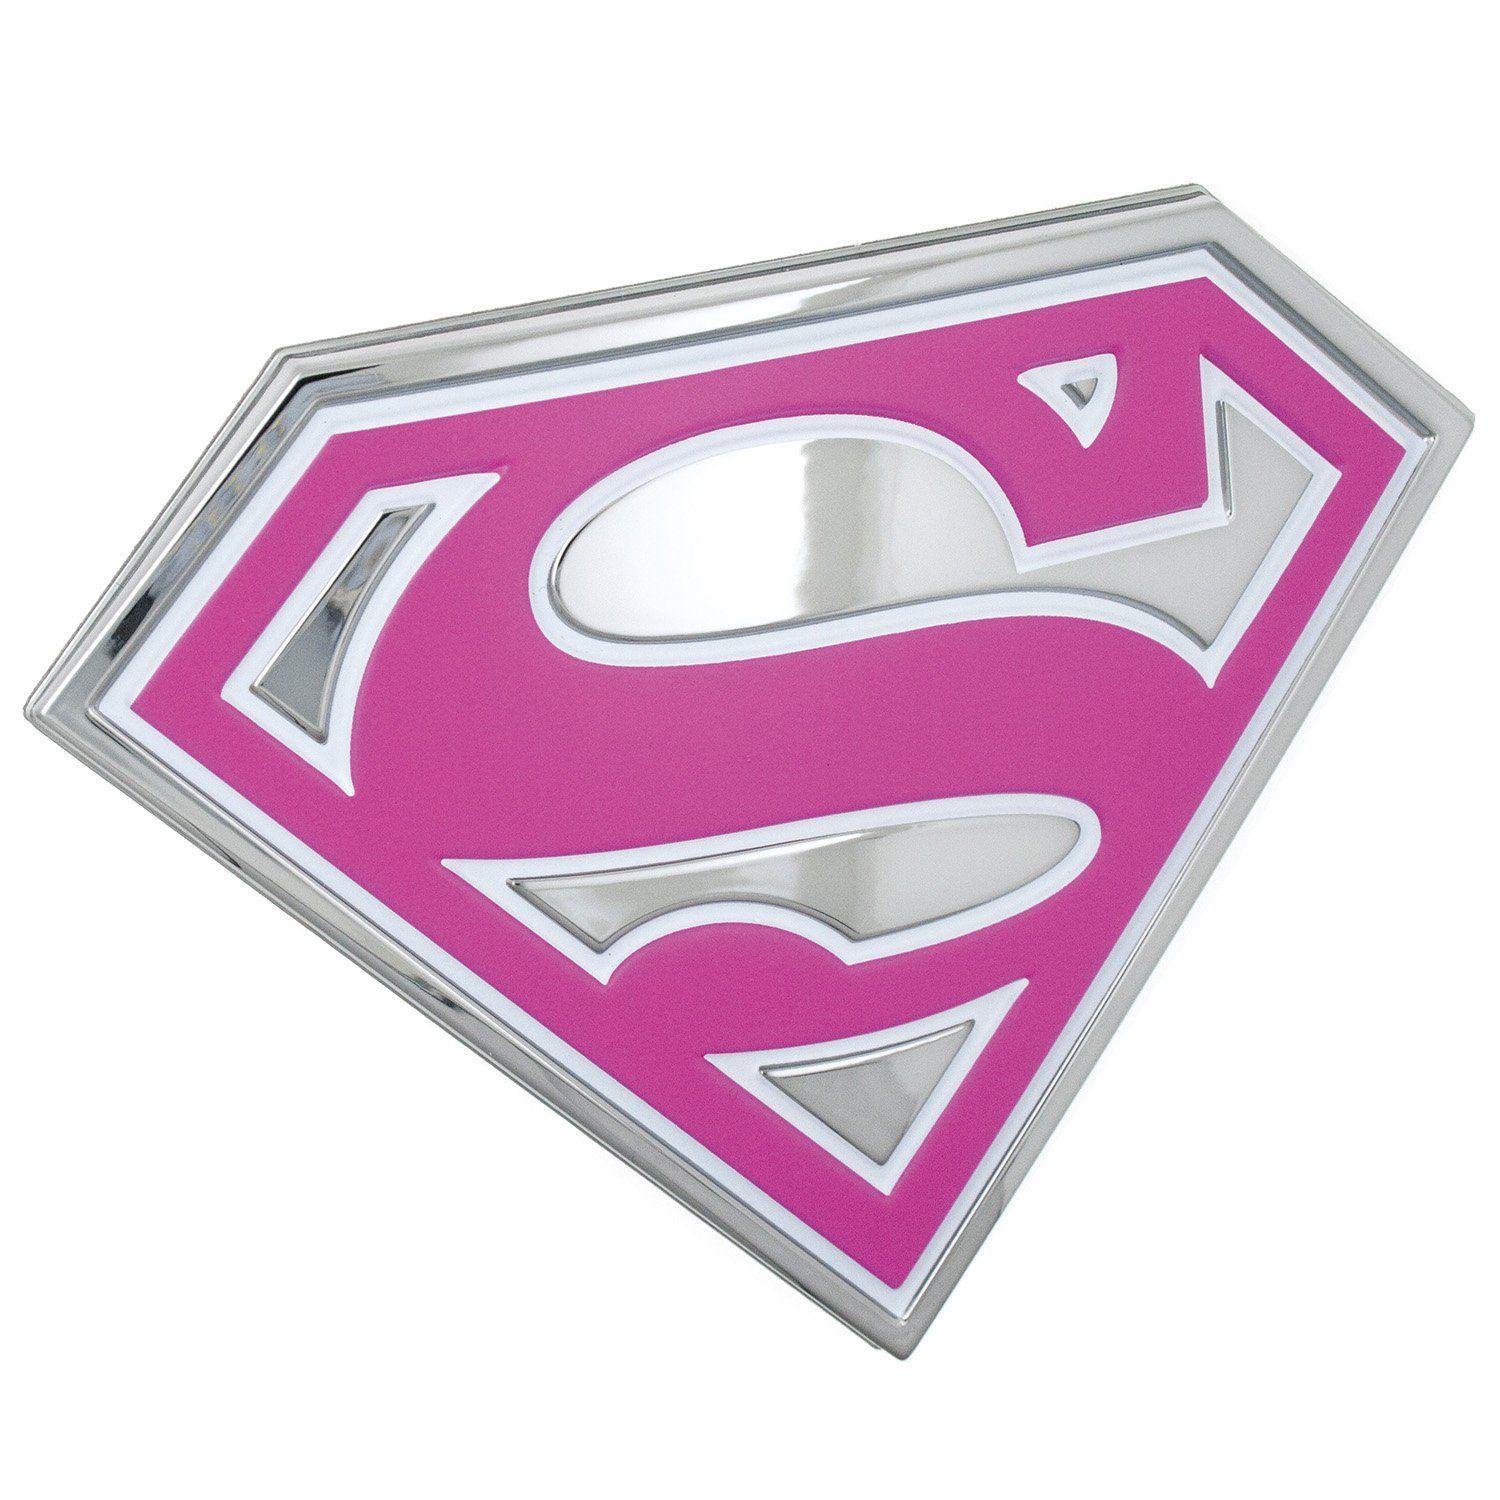 Supergirl Logo - Supergirl Logo 3D Car Emblem (Chrome, Pink, White) DC